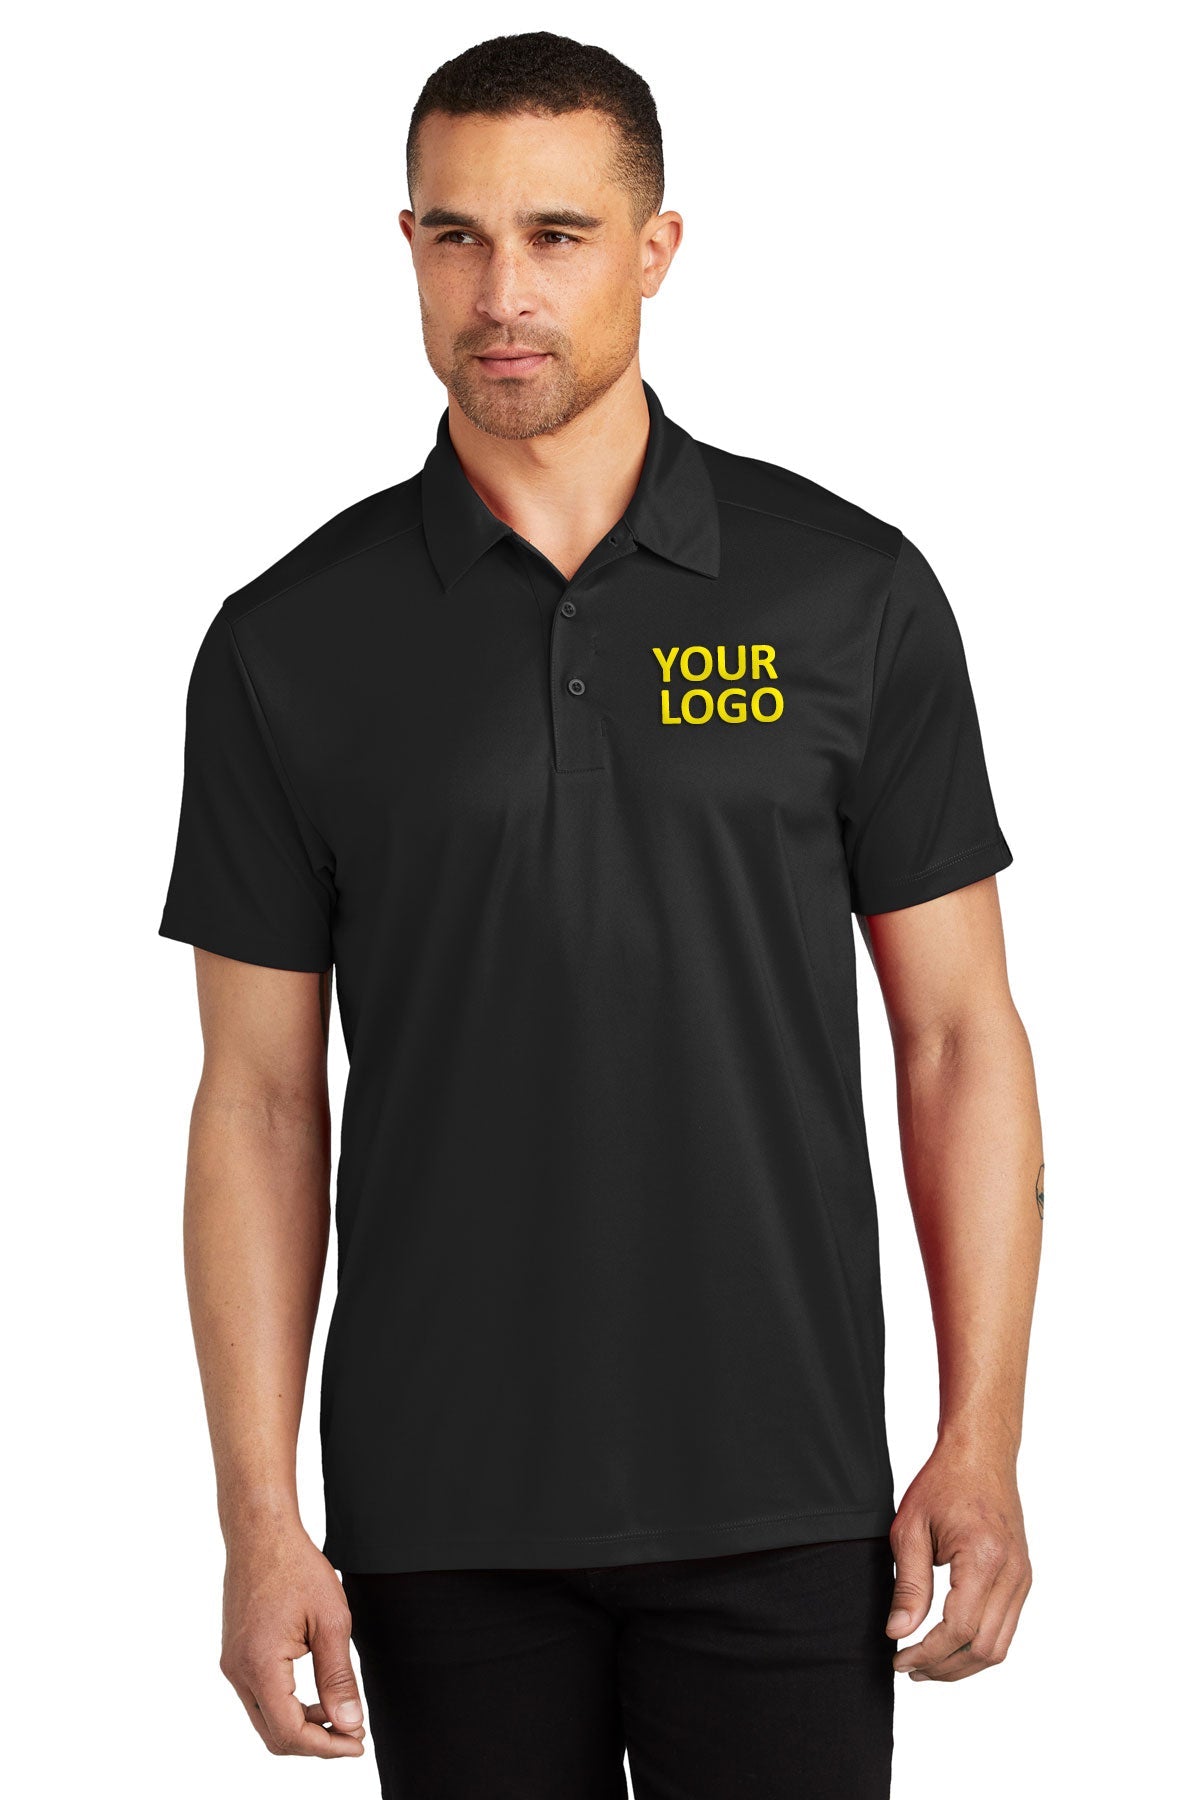 OGIO Blacktop OG125 company polo shirts embroidery